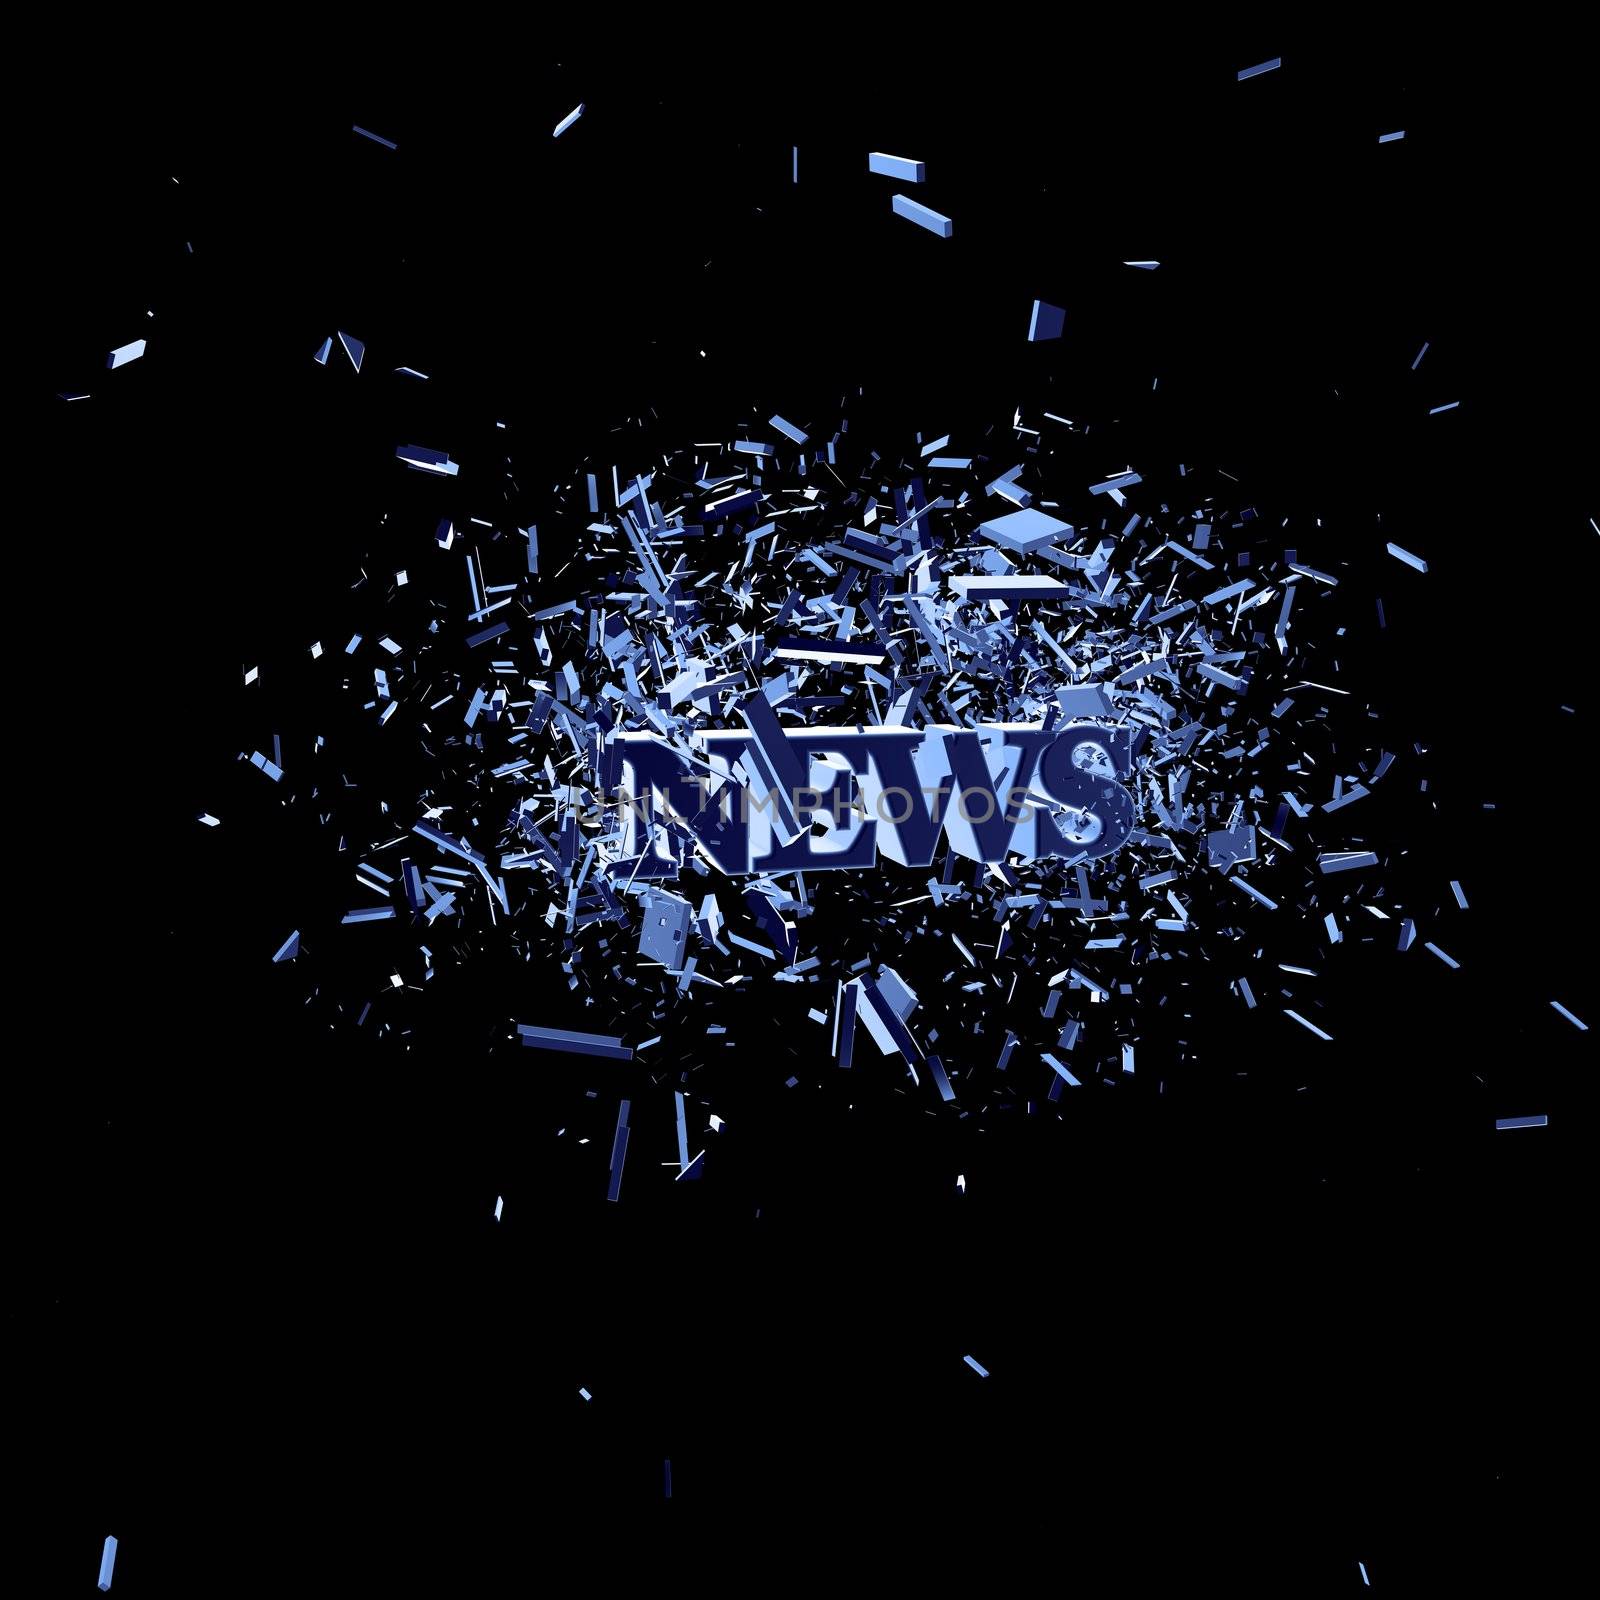 exploding word news - 3d illustration